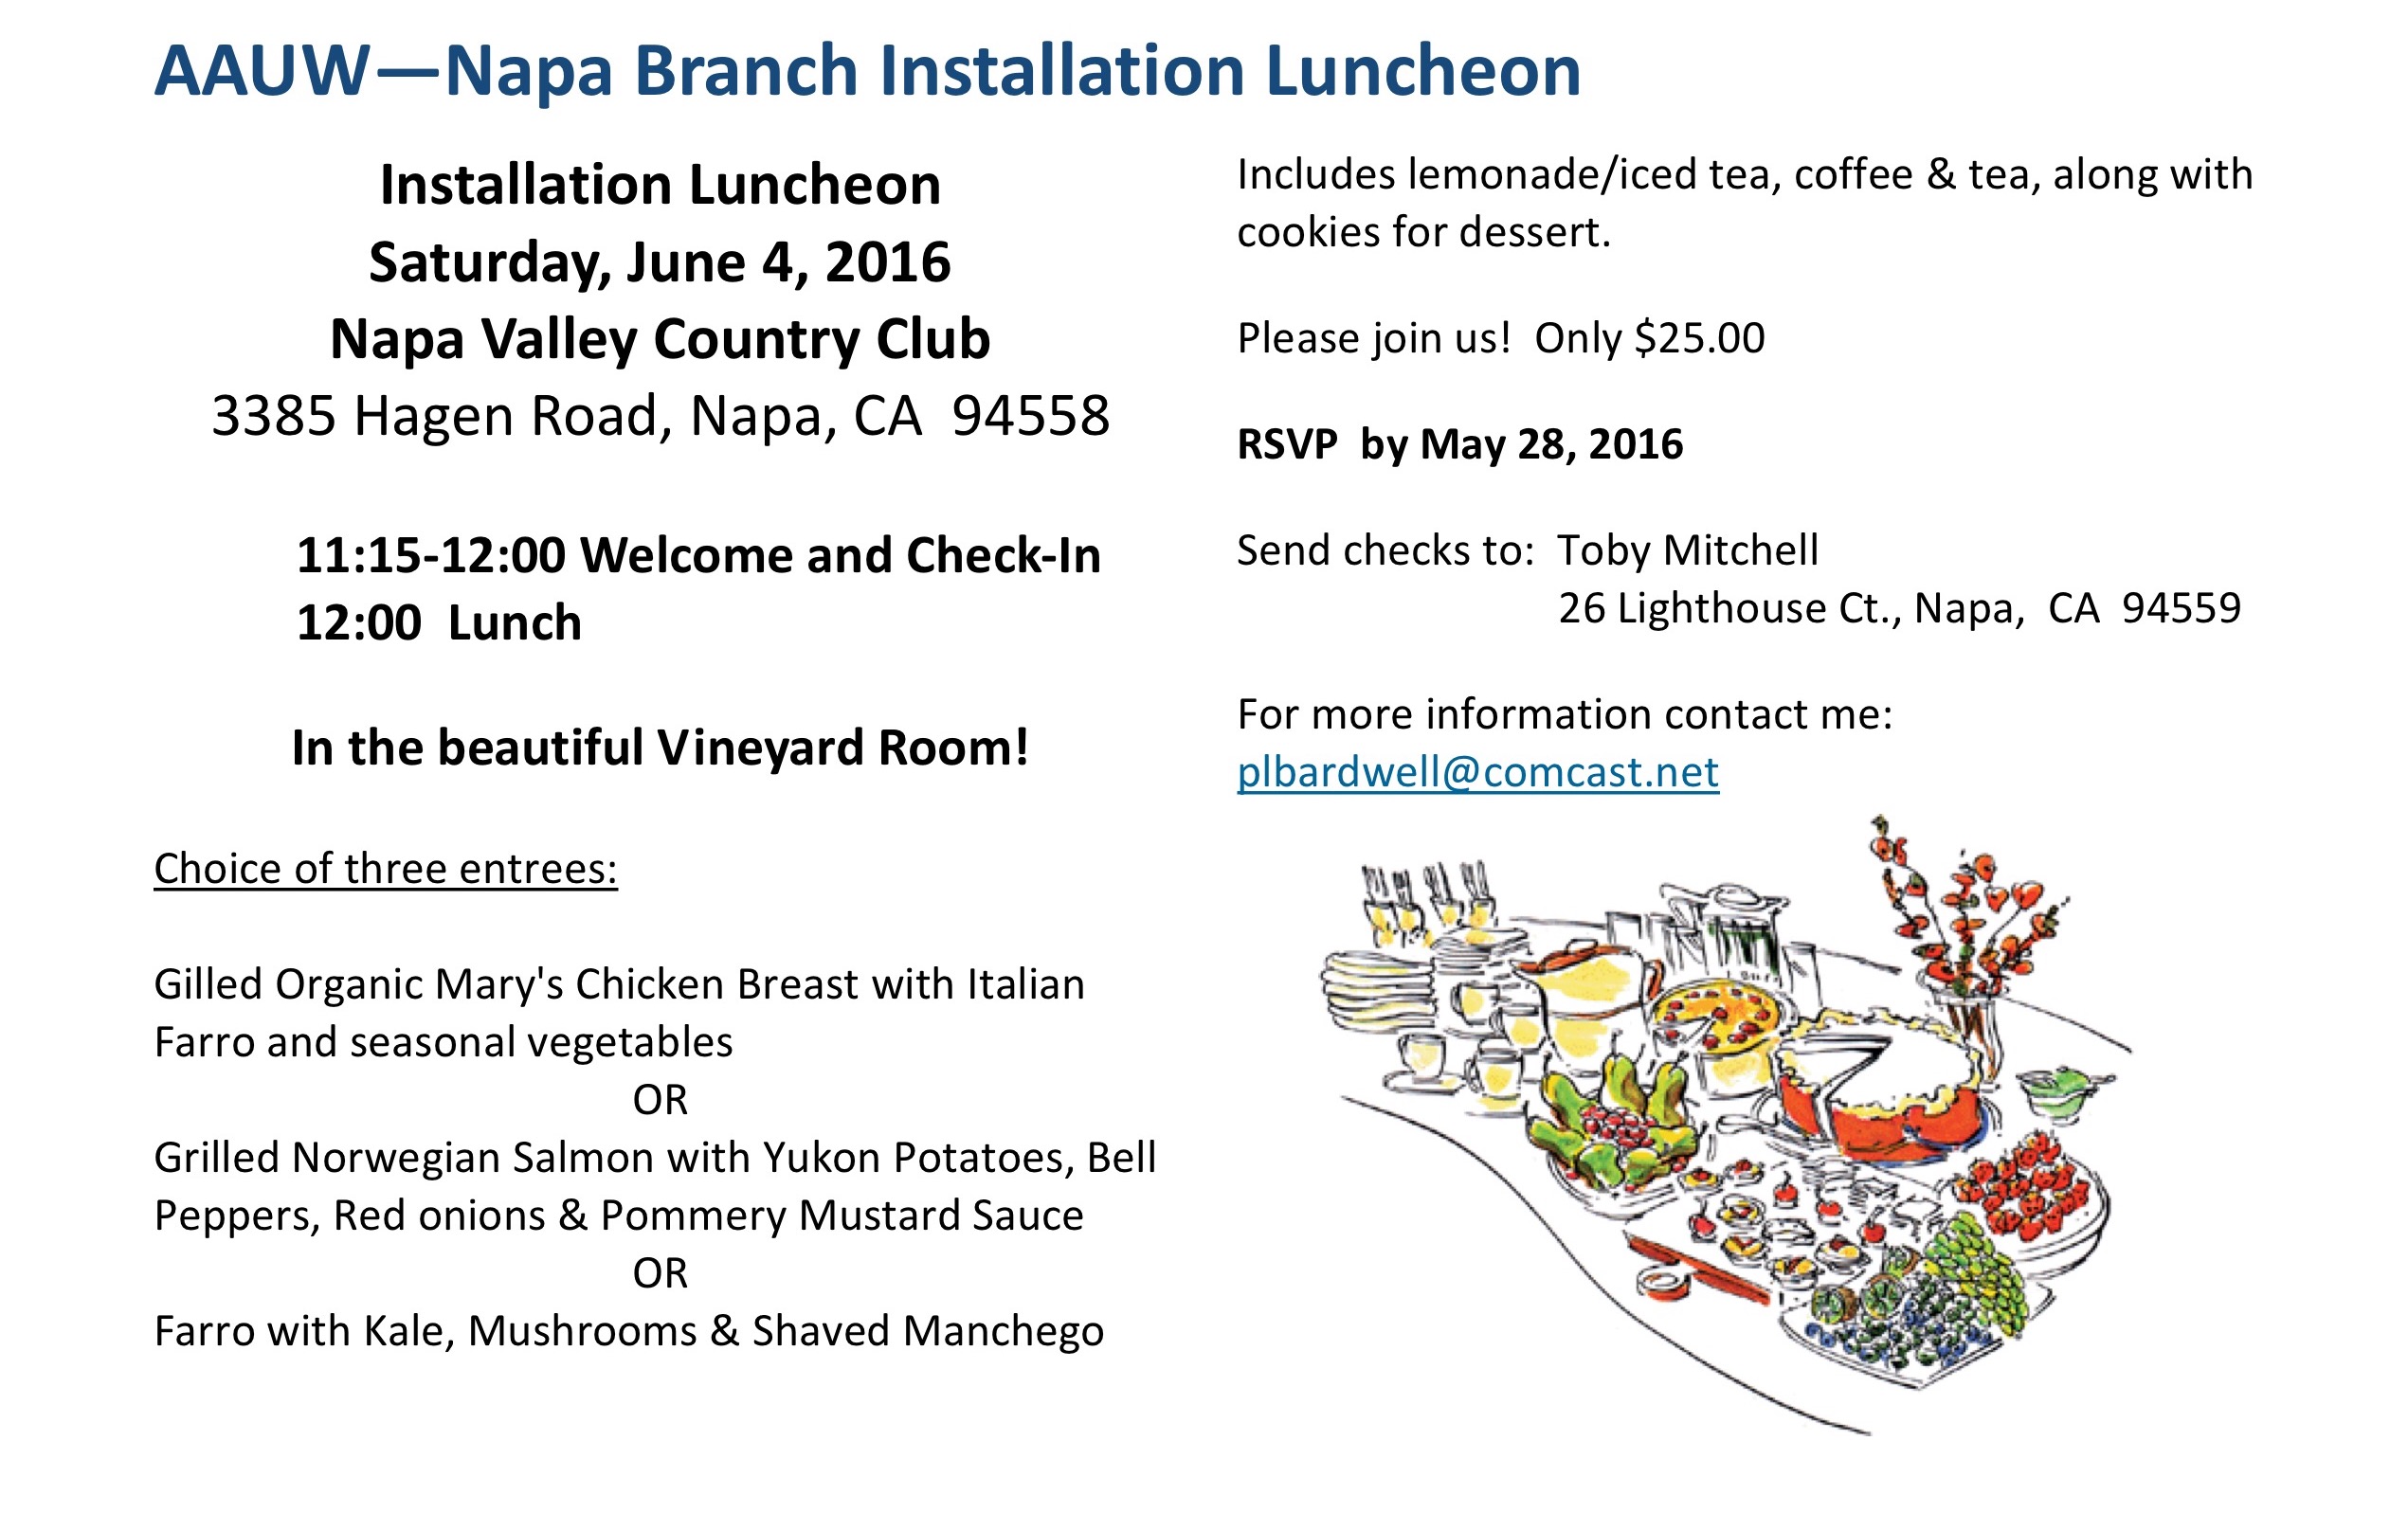 Napa branch installation luncheon